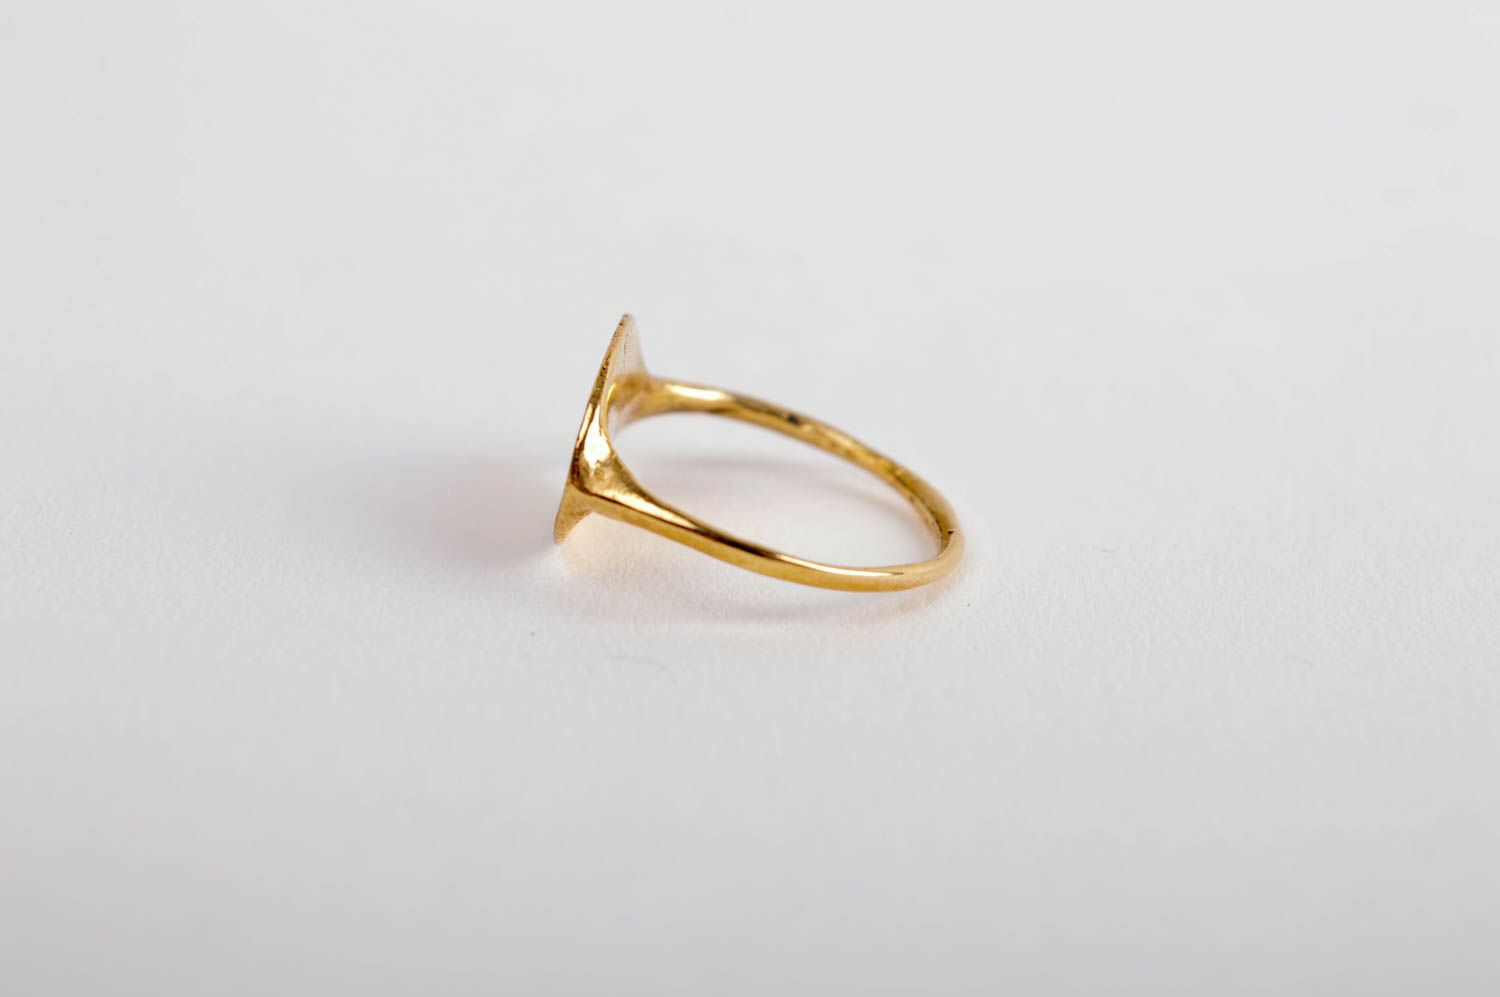 Metal designer ring beautiful stylish ring metal accessories cute gift photo 3